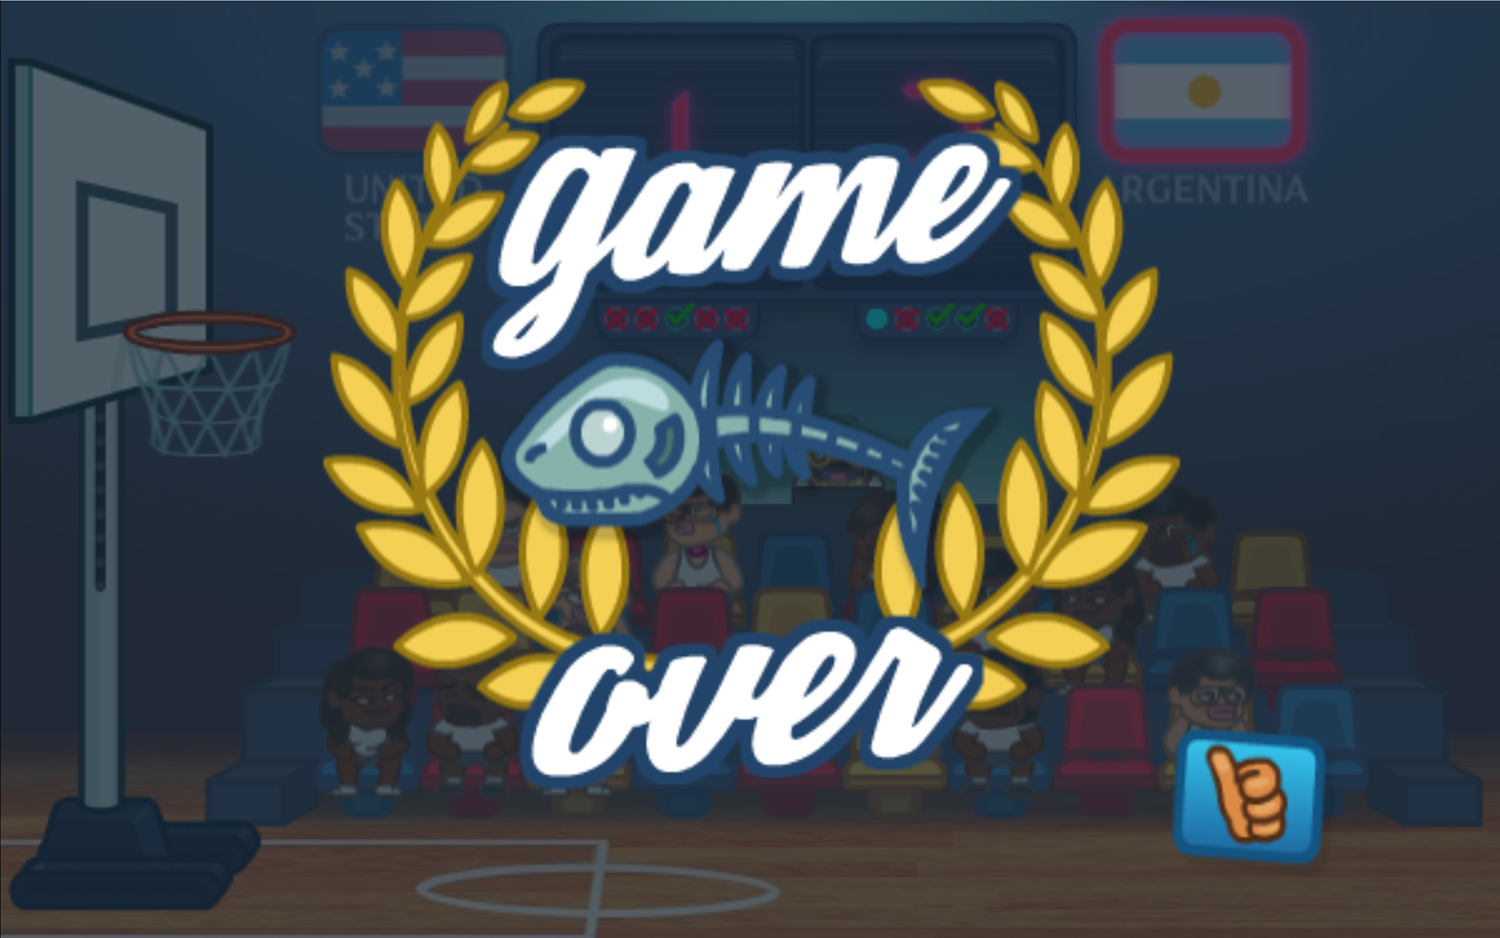 Basket Champs Game Over Screenshot.